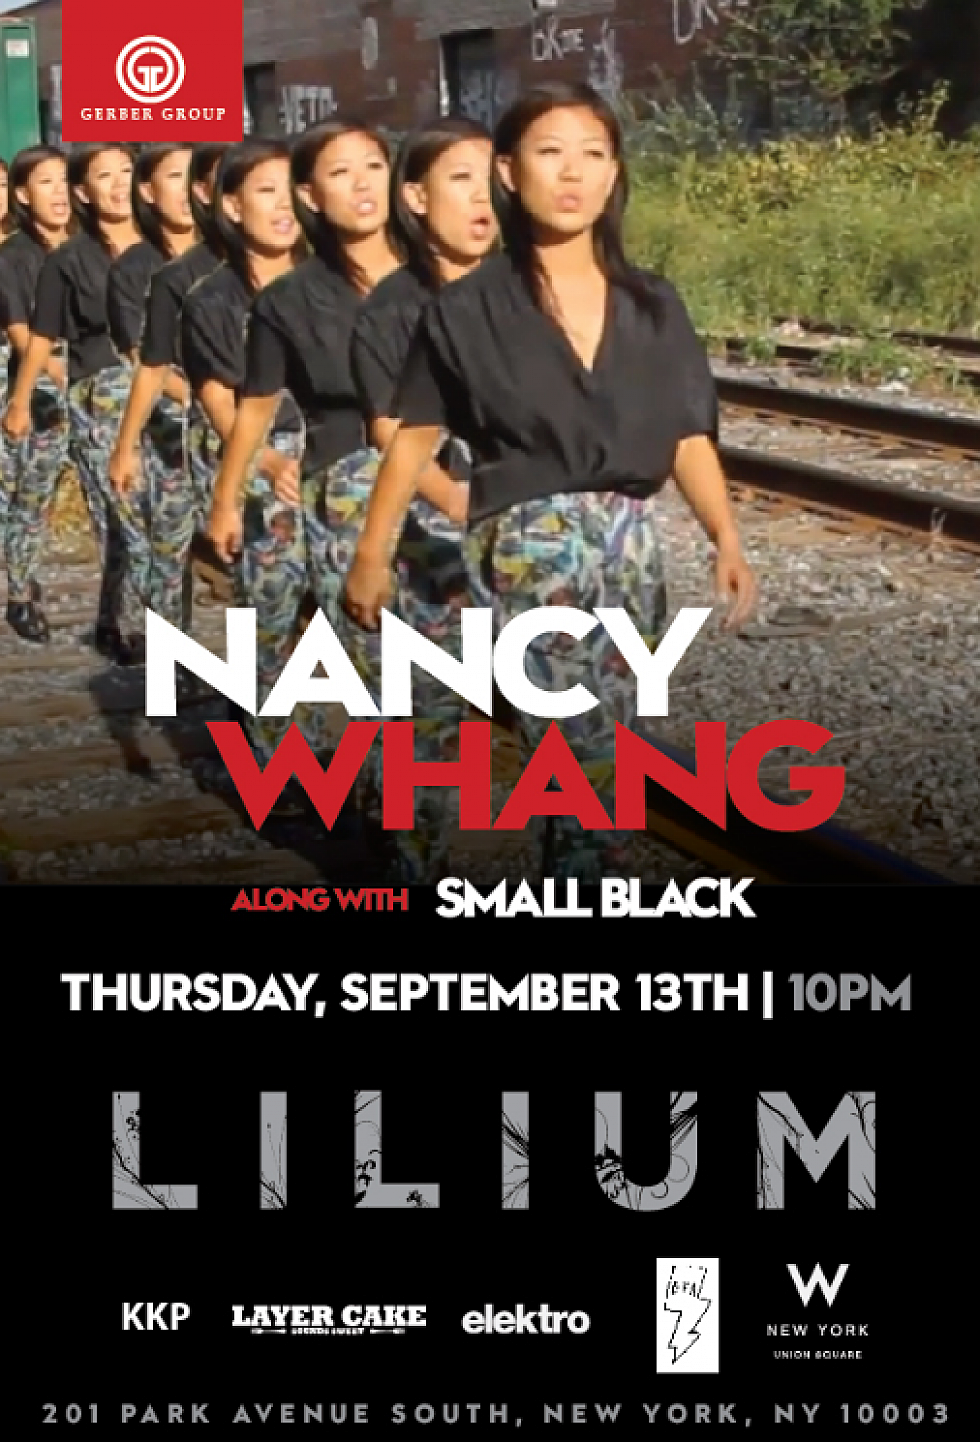 mercedes-benz fashion week: Nancy Whang with Small Black at Lilium